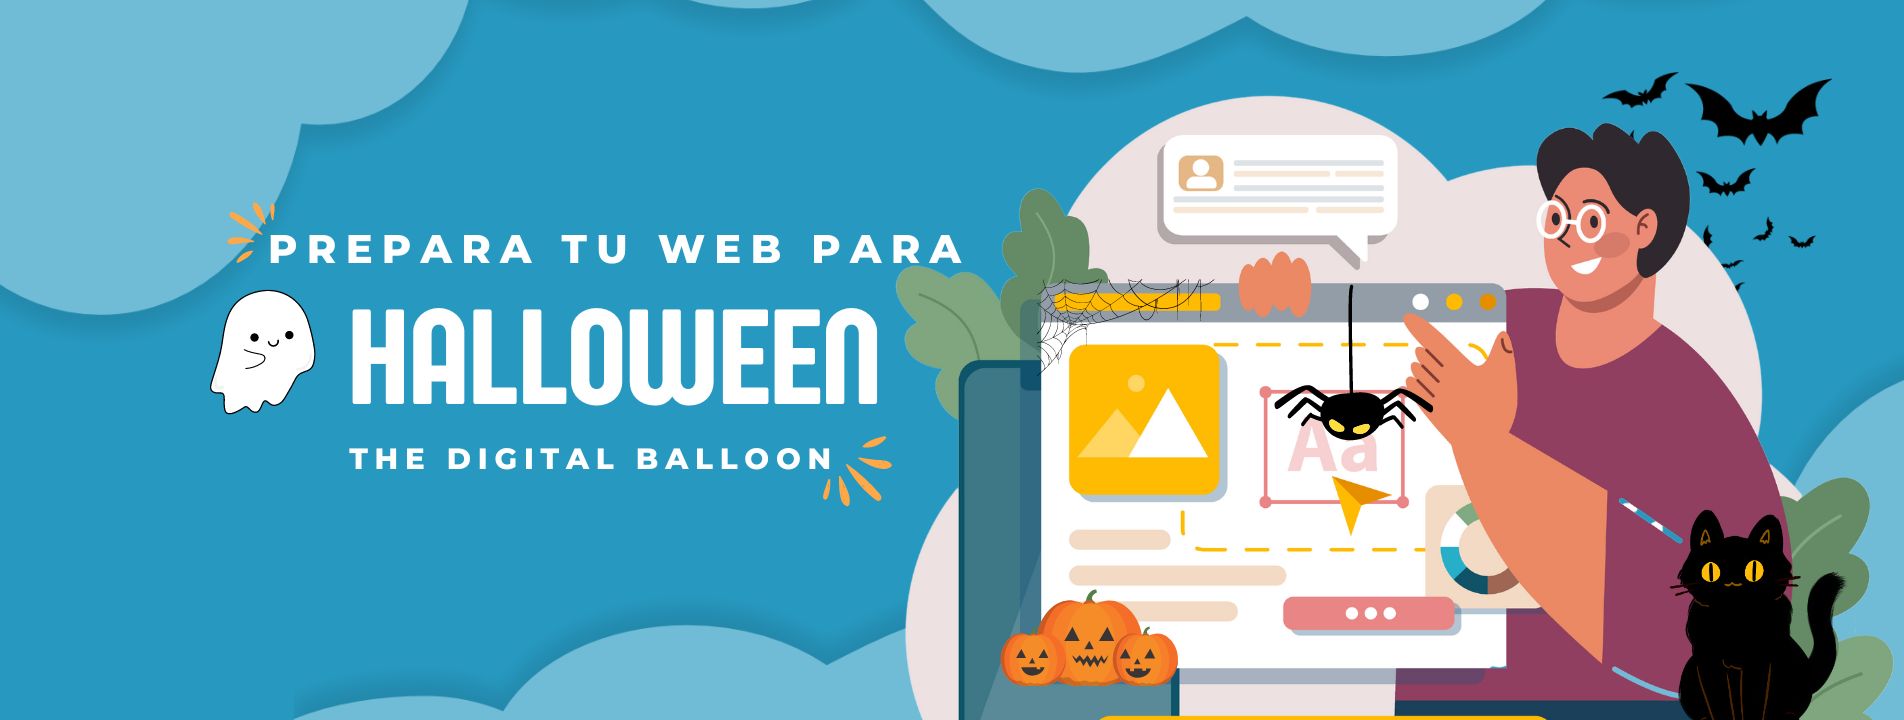 prepara tu web para halloween